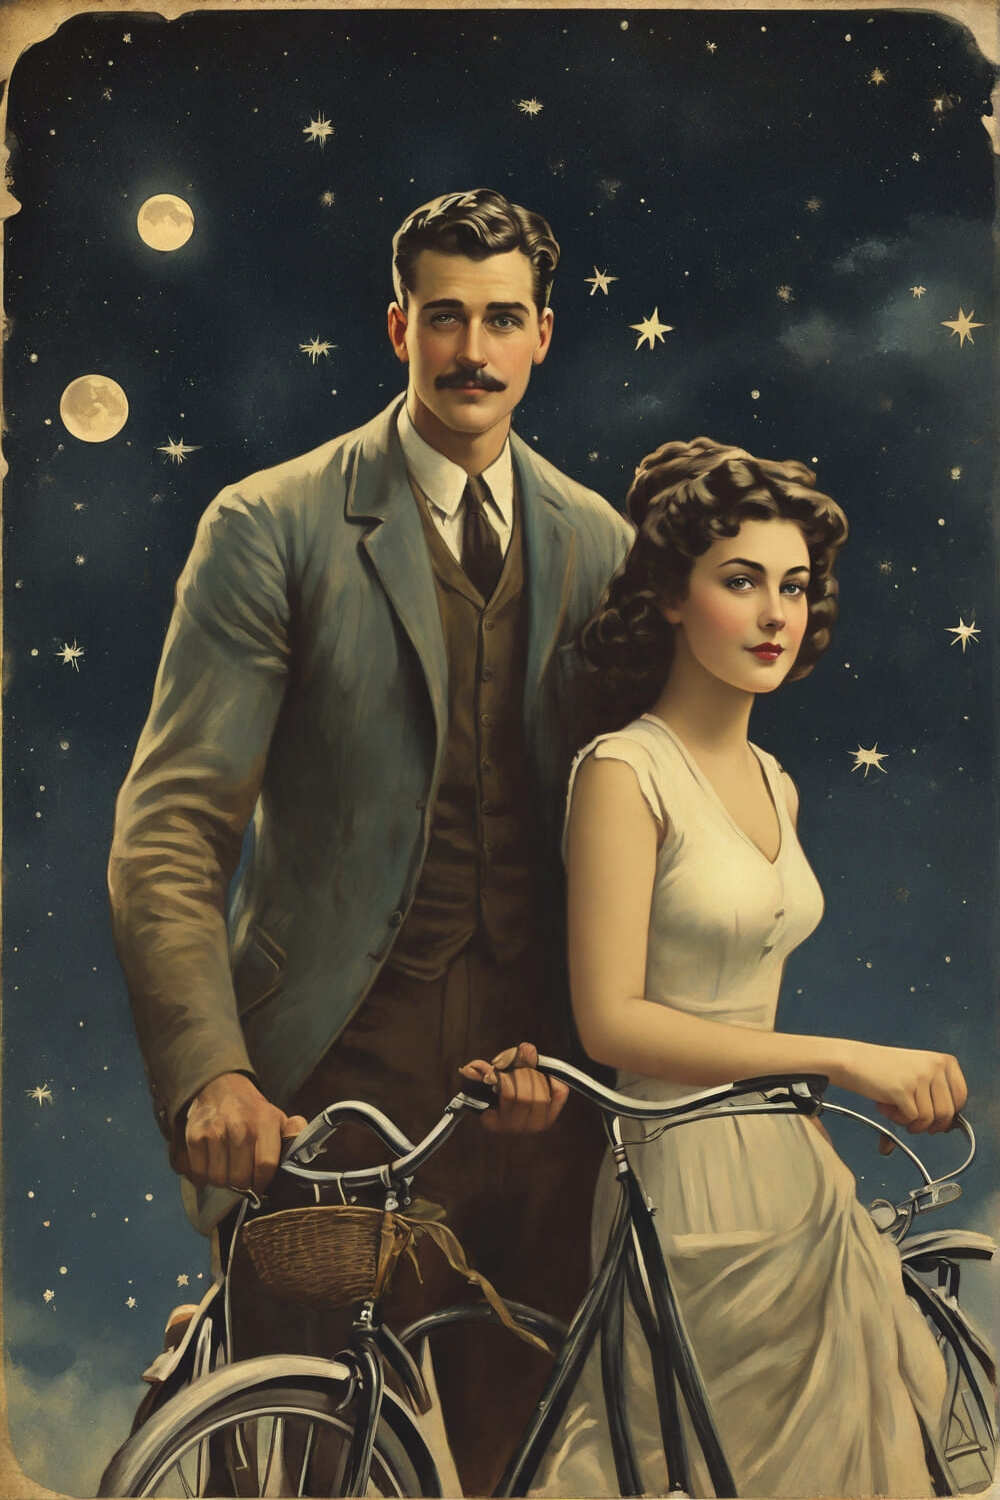 postcard, vintage style, bicycle, man, woman, stars pinterest preview image.